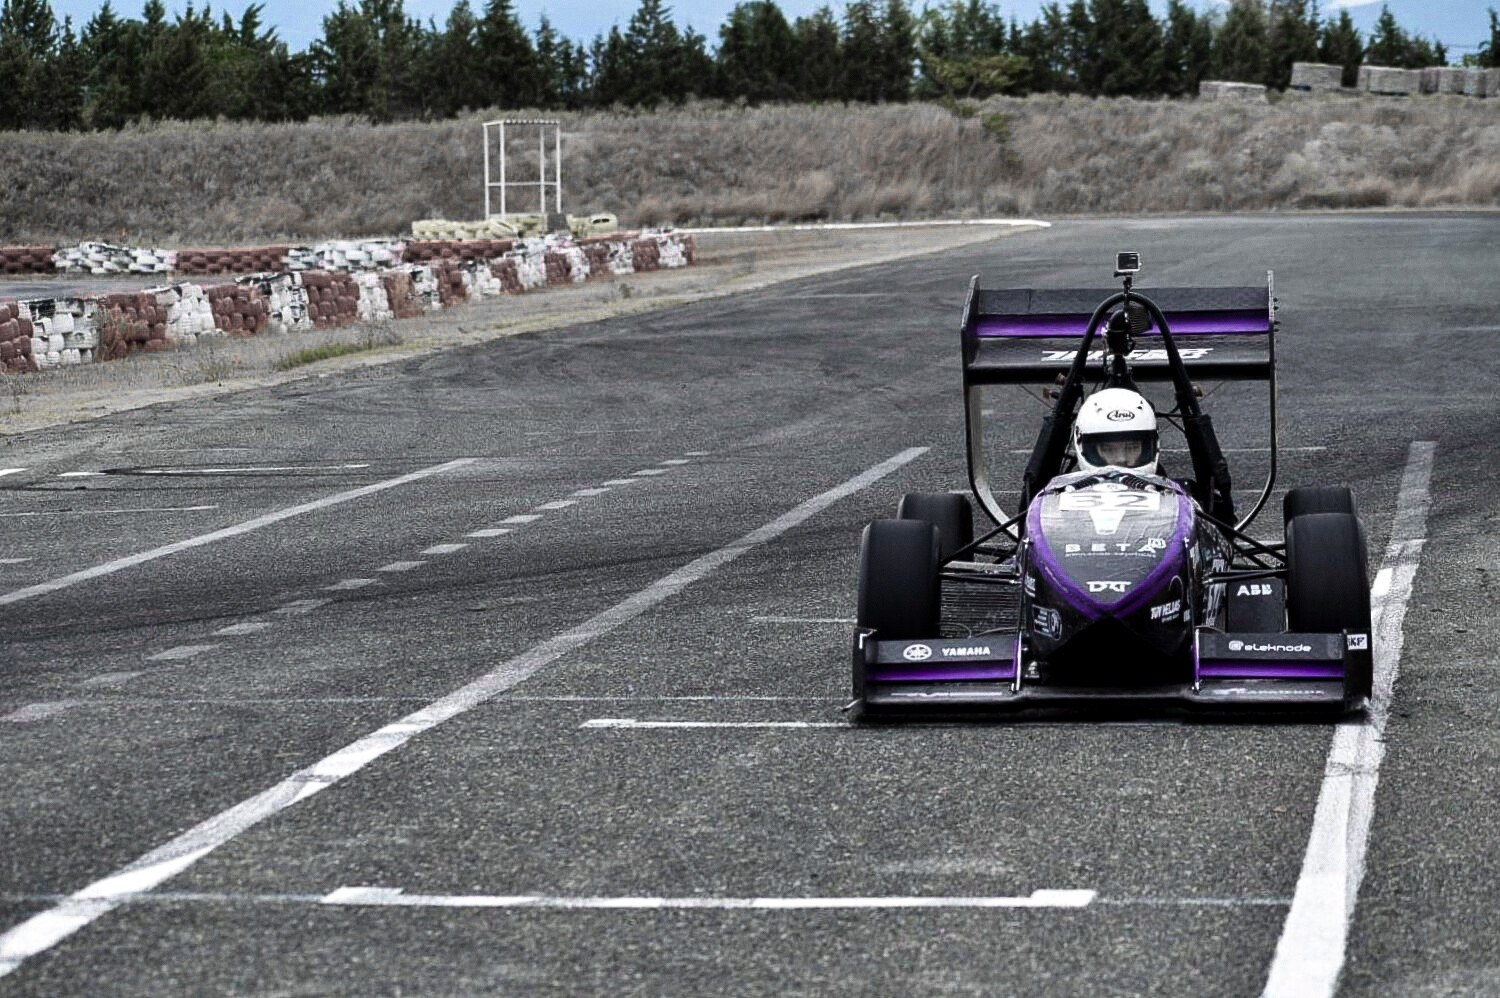 More information about "Ηλεκτροκίνητο και driveless το νέο μονοθέσιο της Democritus Racing Team"